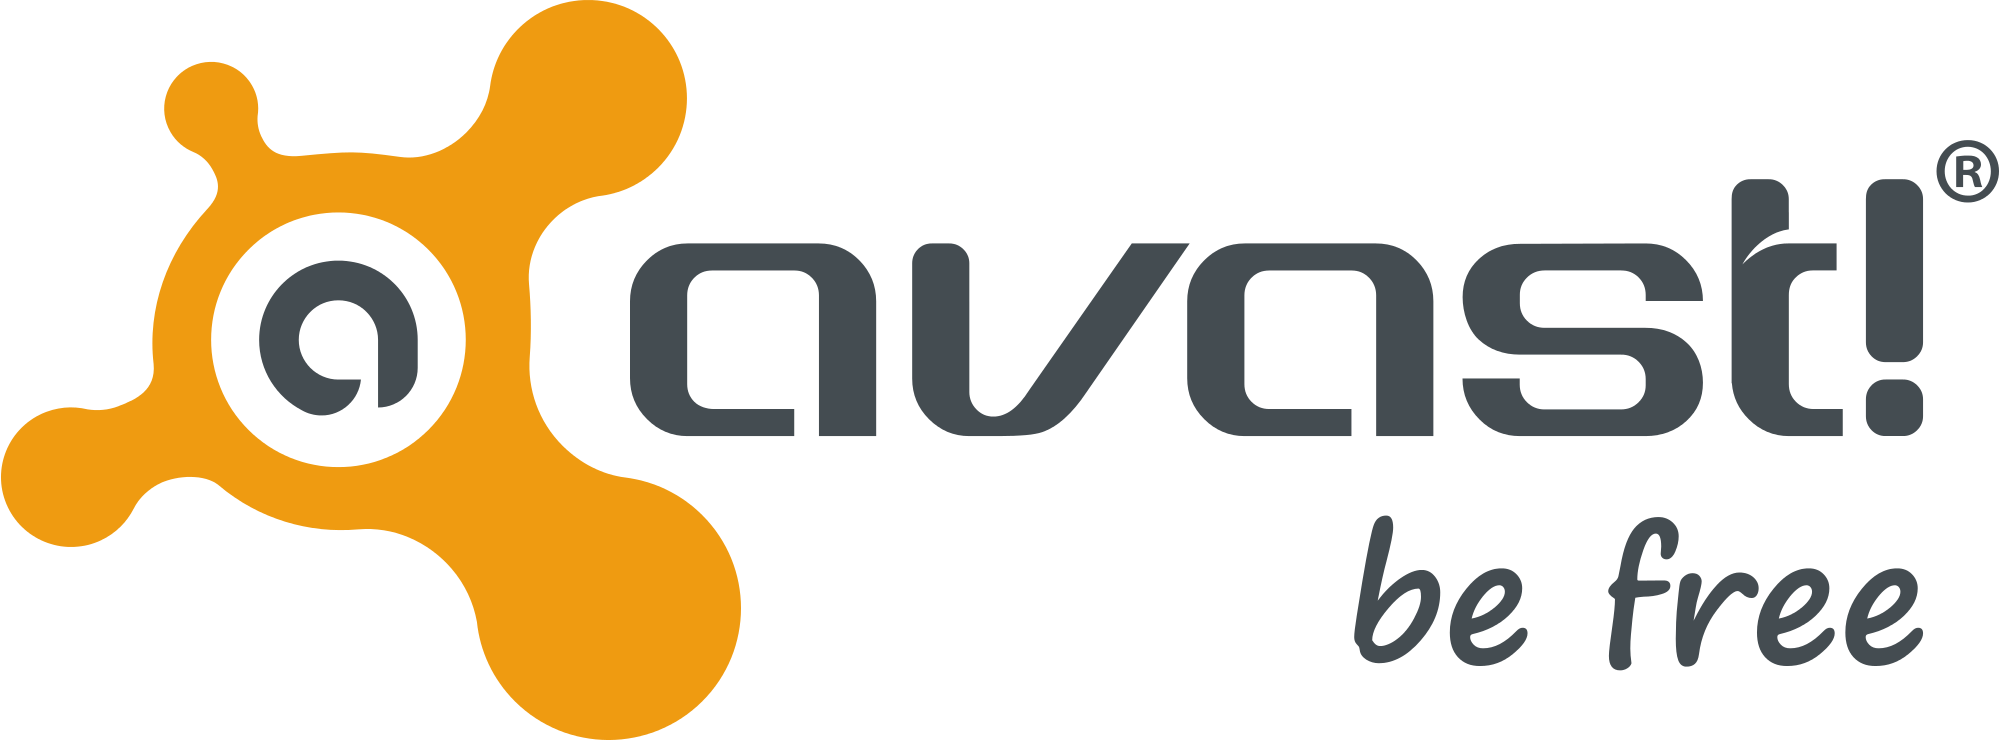 Free Avast Antivirus 8 With Crack Till 2020 100% Working